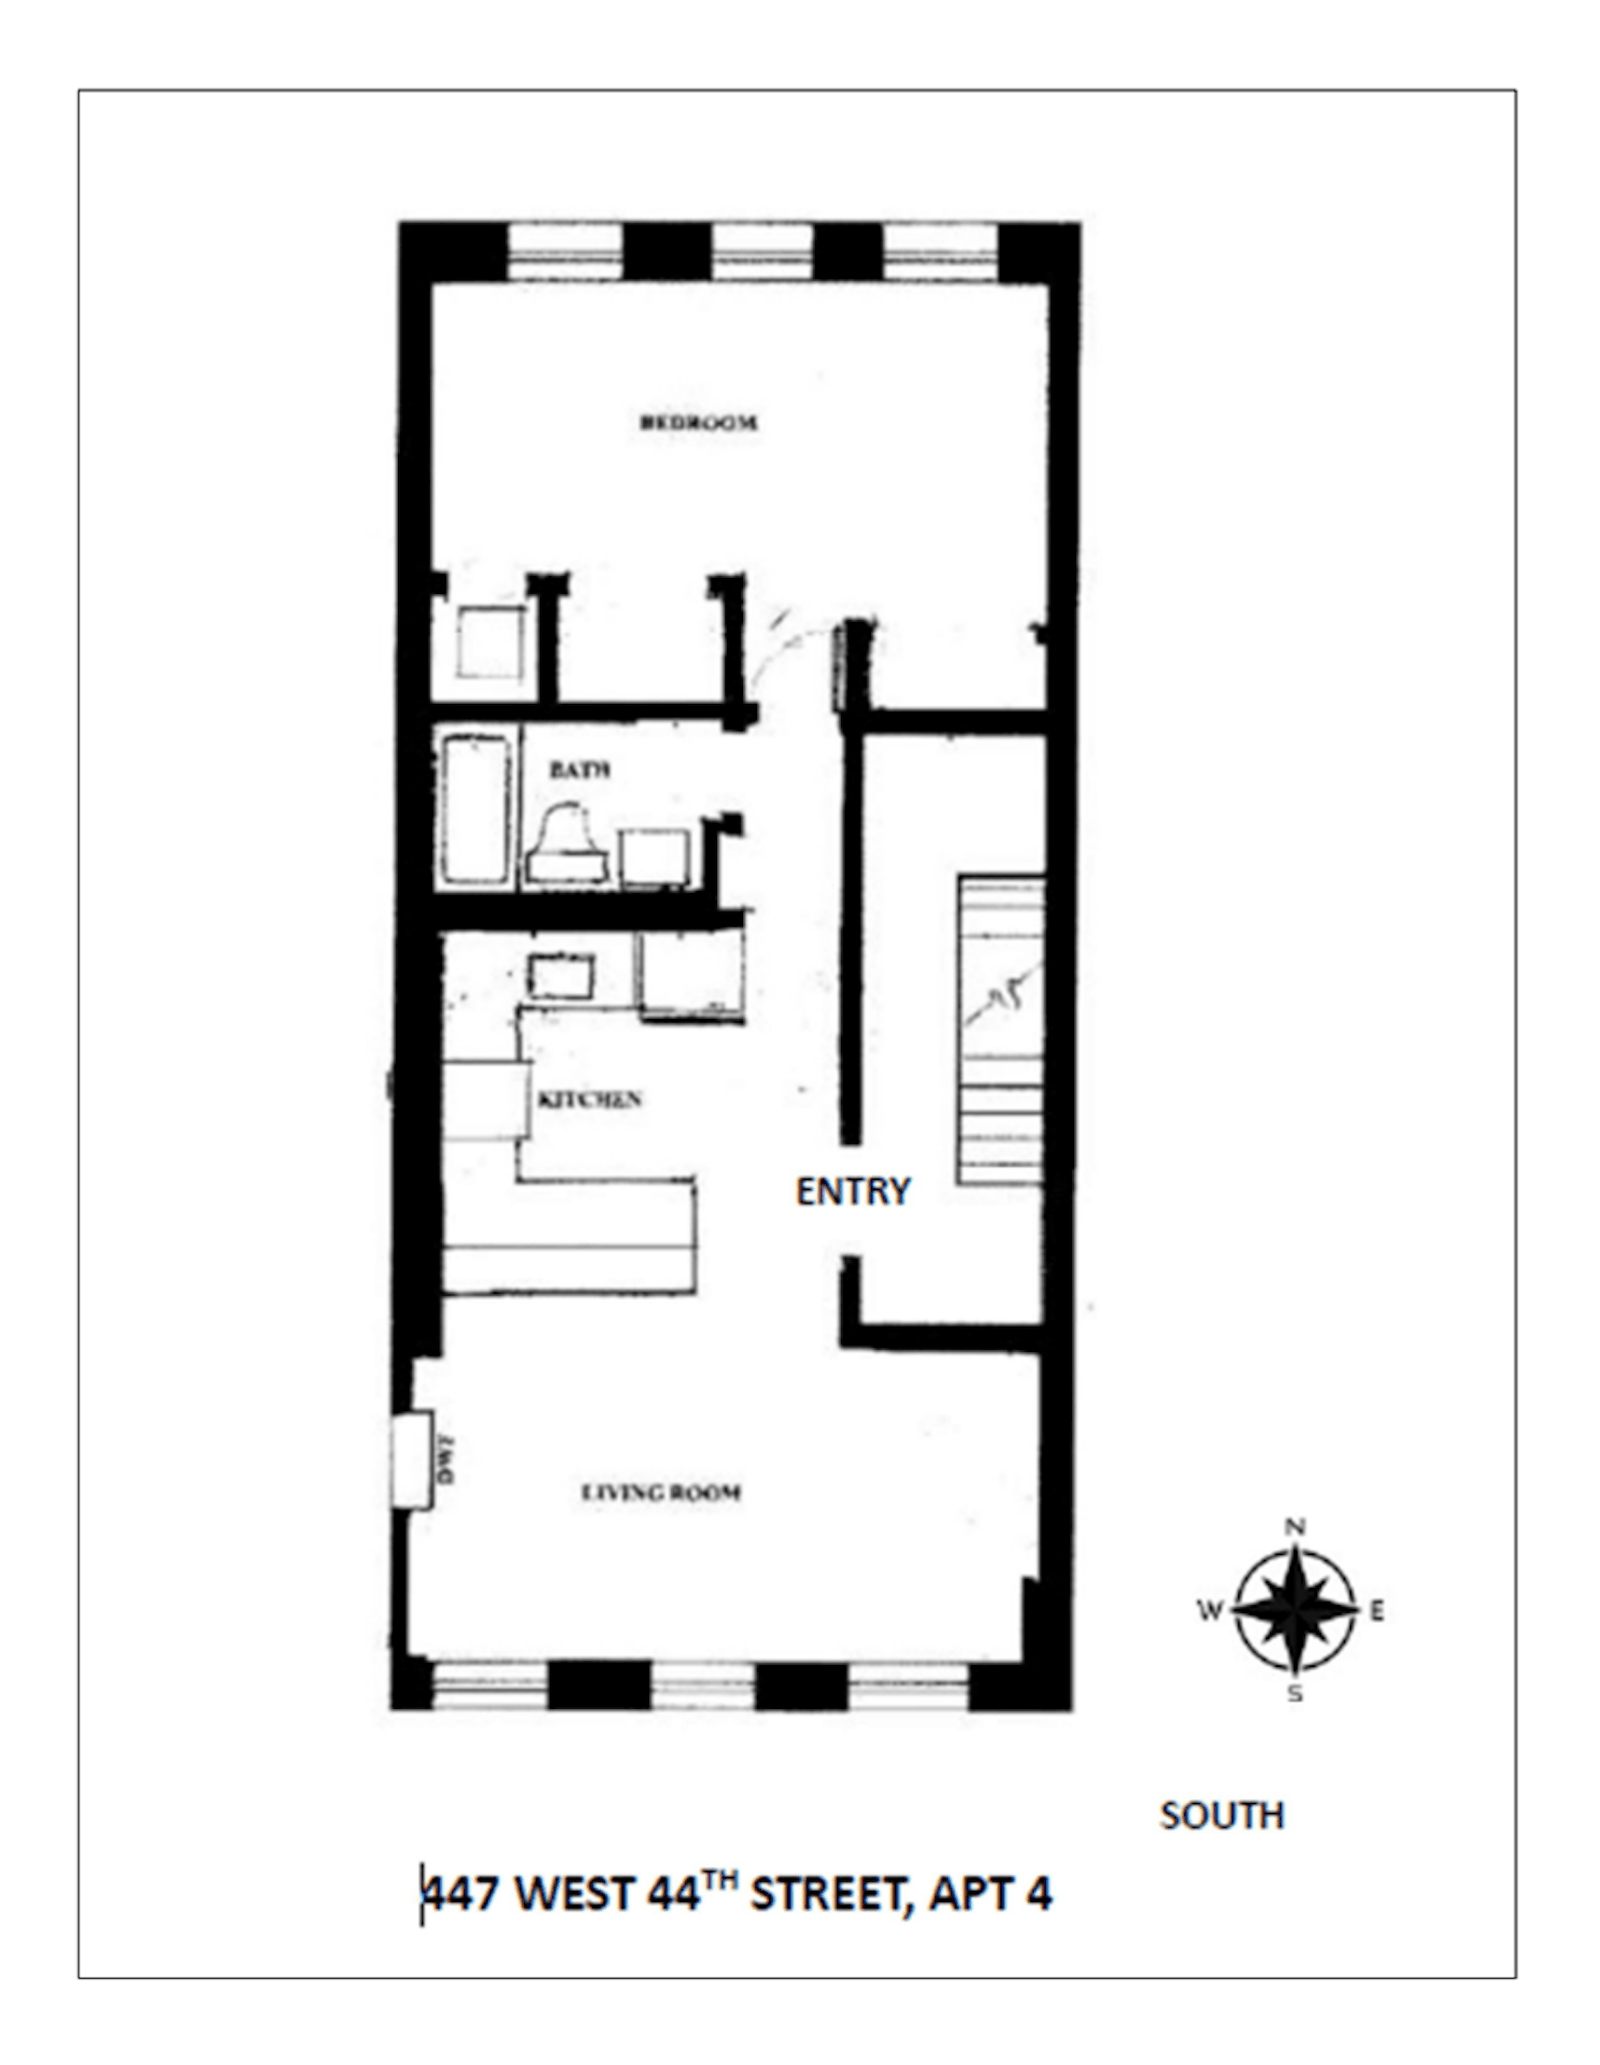 Floorplan for 447 West, 44th Street, 4